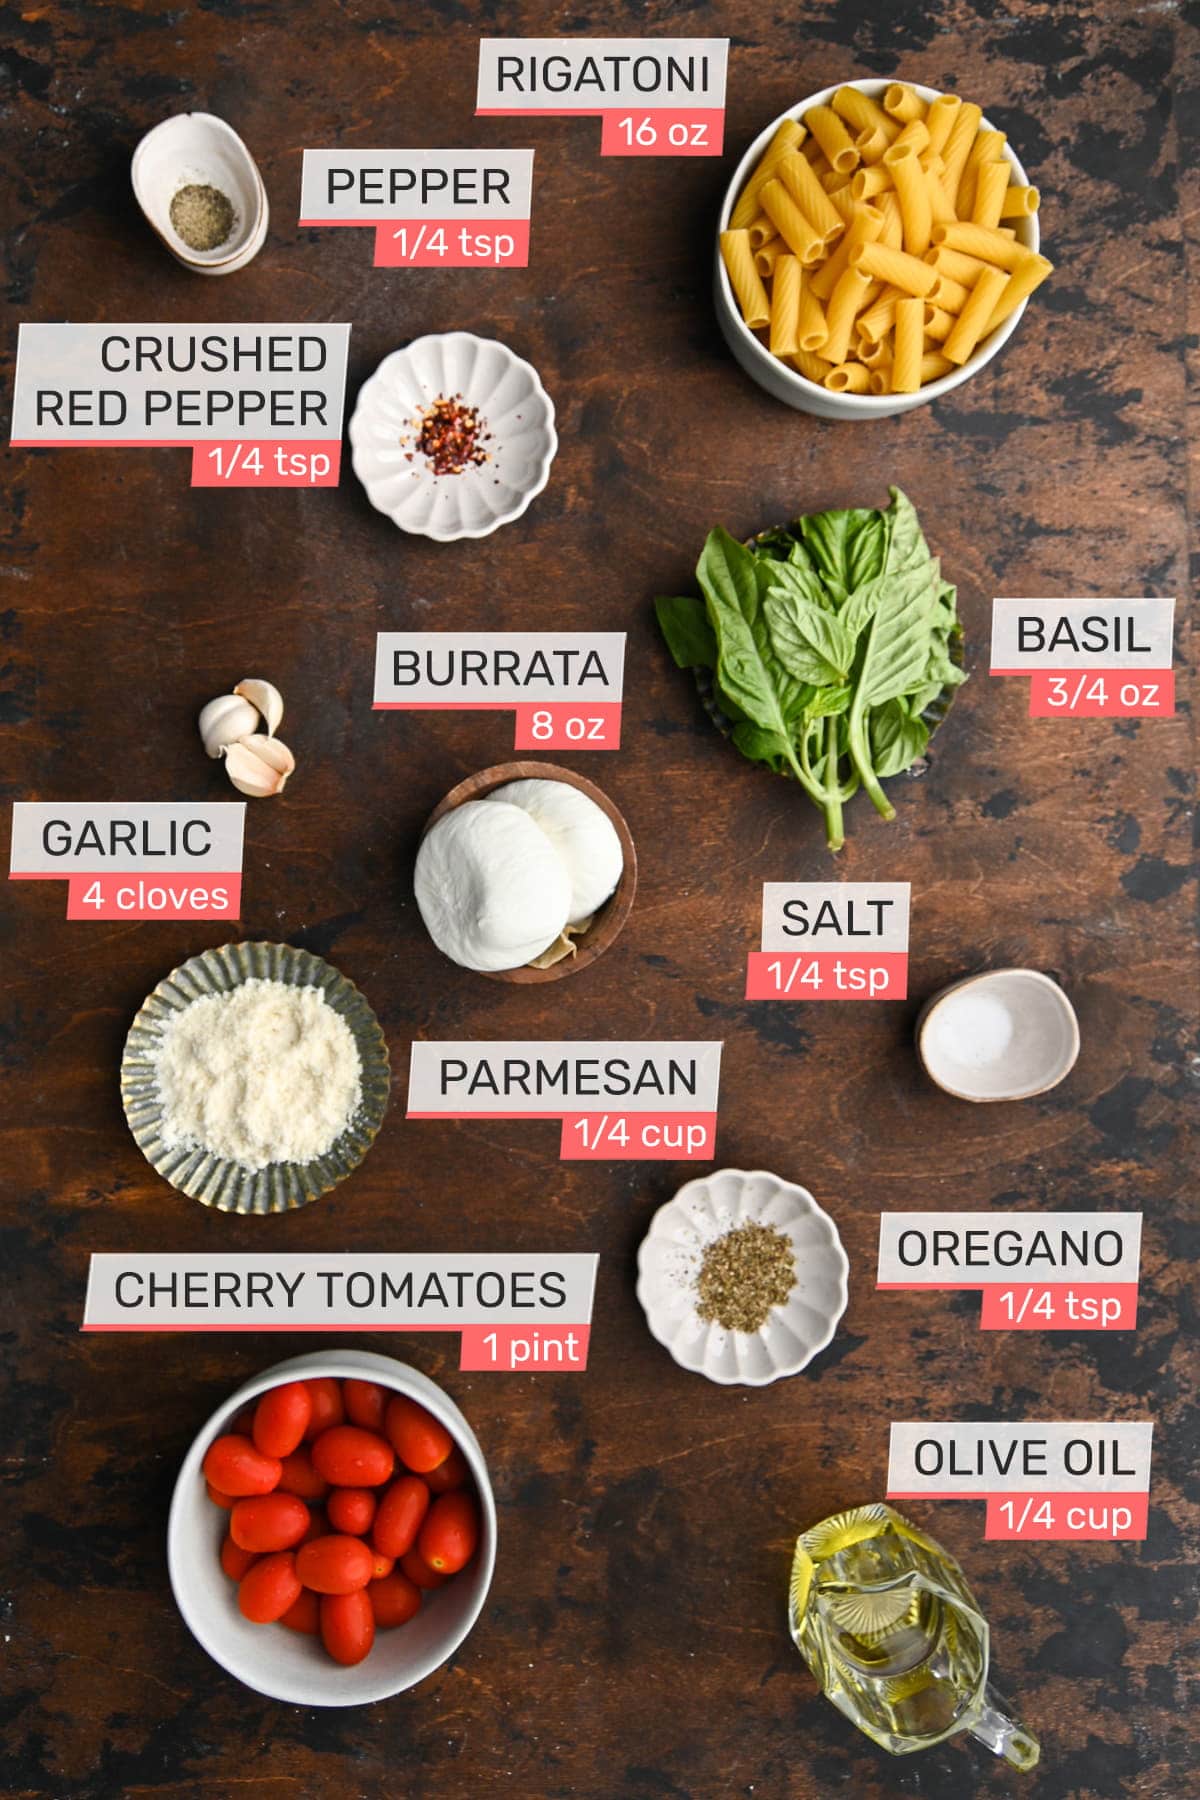 Riagtoni, pepper, crushed red pepper, garlic, burrata, basil, parmesan, oregano, salt, olive oil, and cherry tomatoes